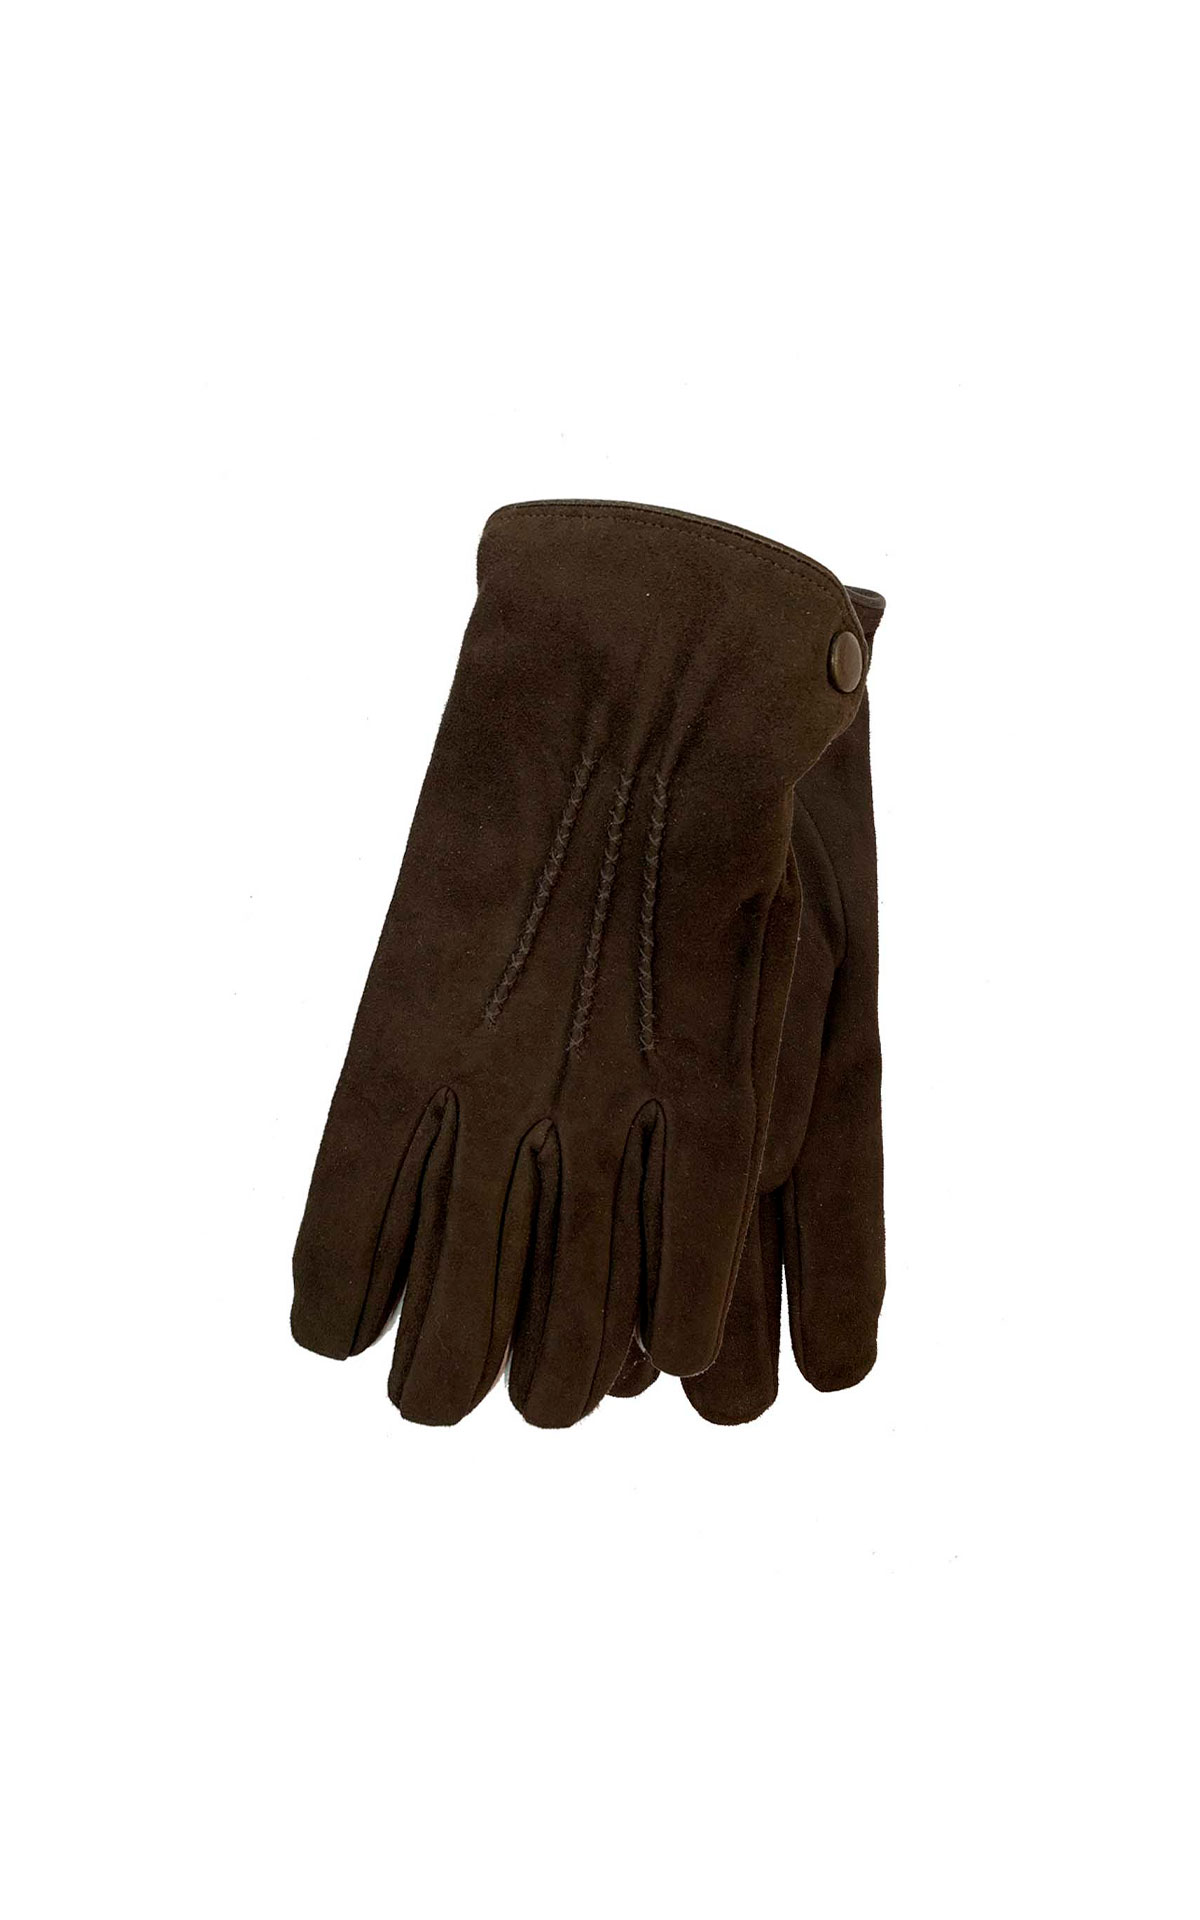 Eleventy Brown gloves from Bicester Village